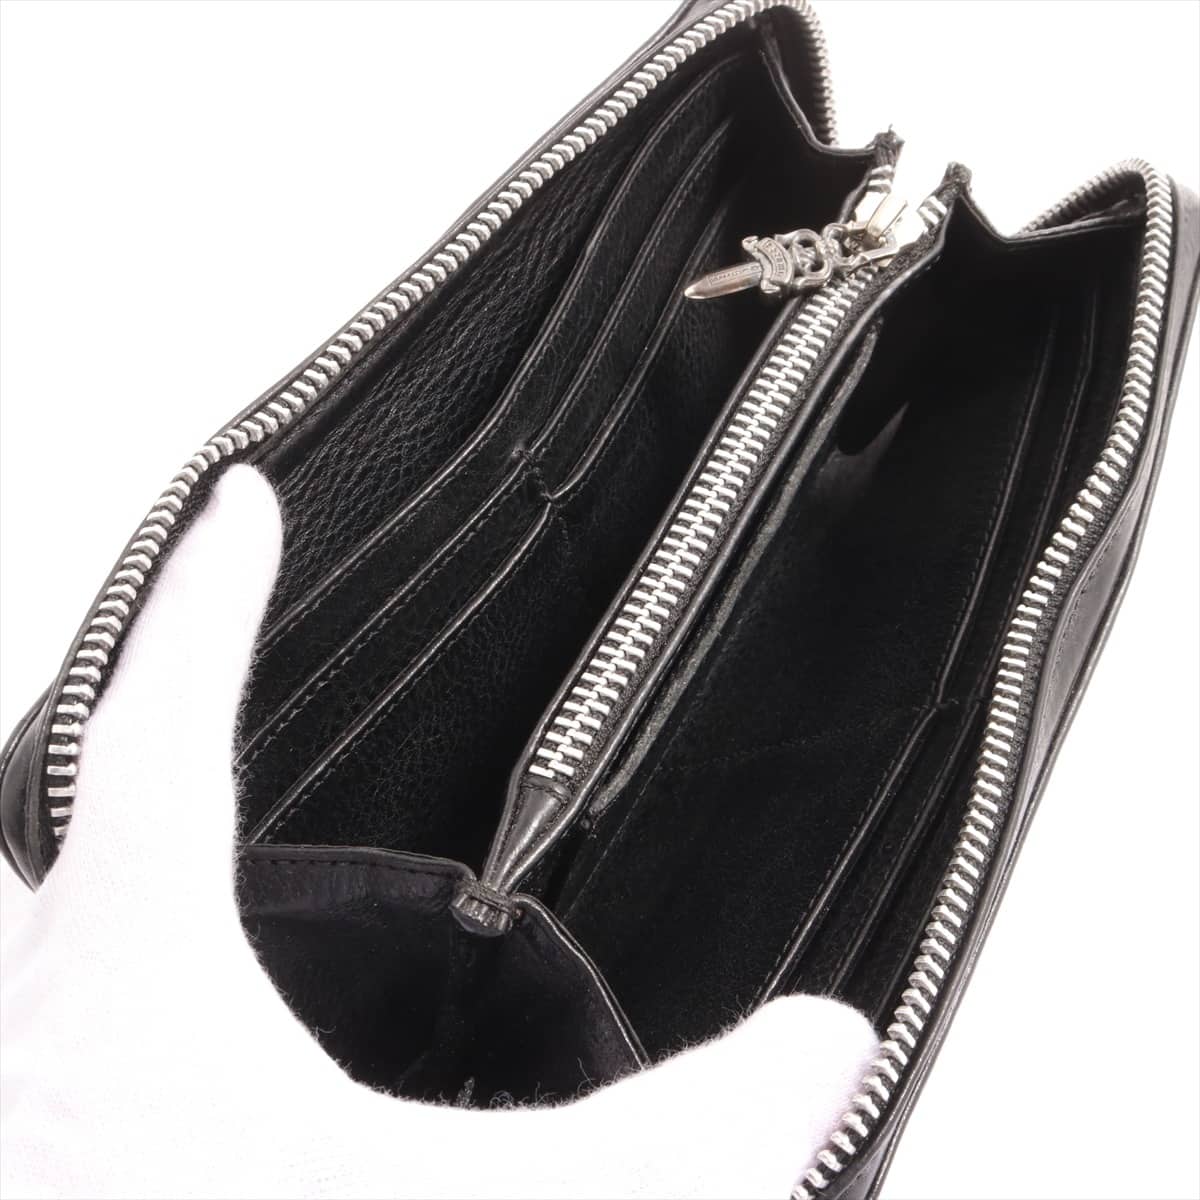 Chrome Hearts REC F ZIP Wallet Leather Plain Black | eBay